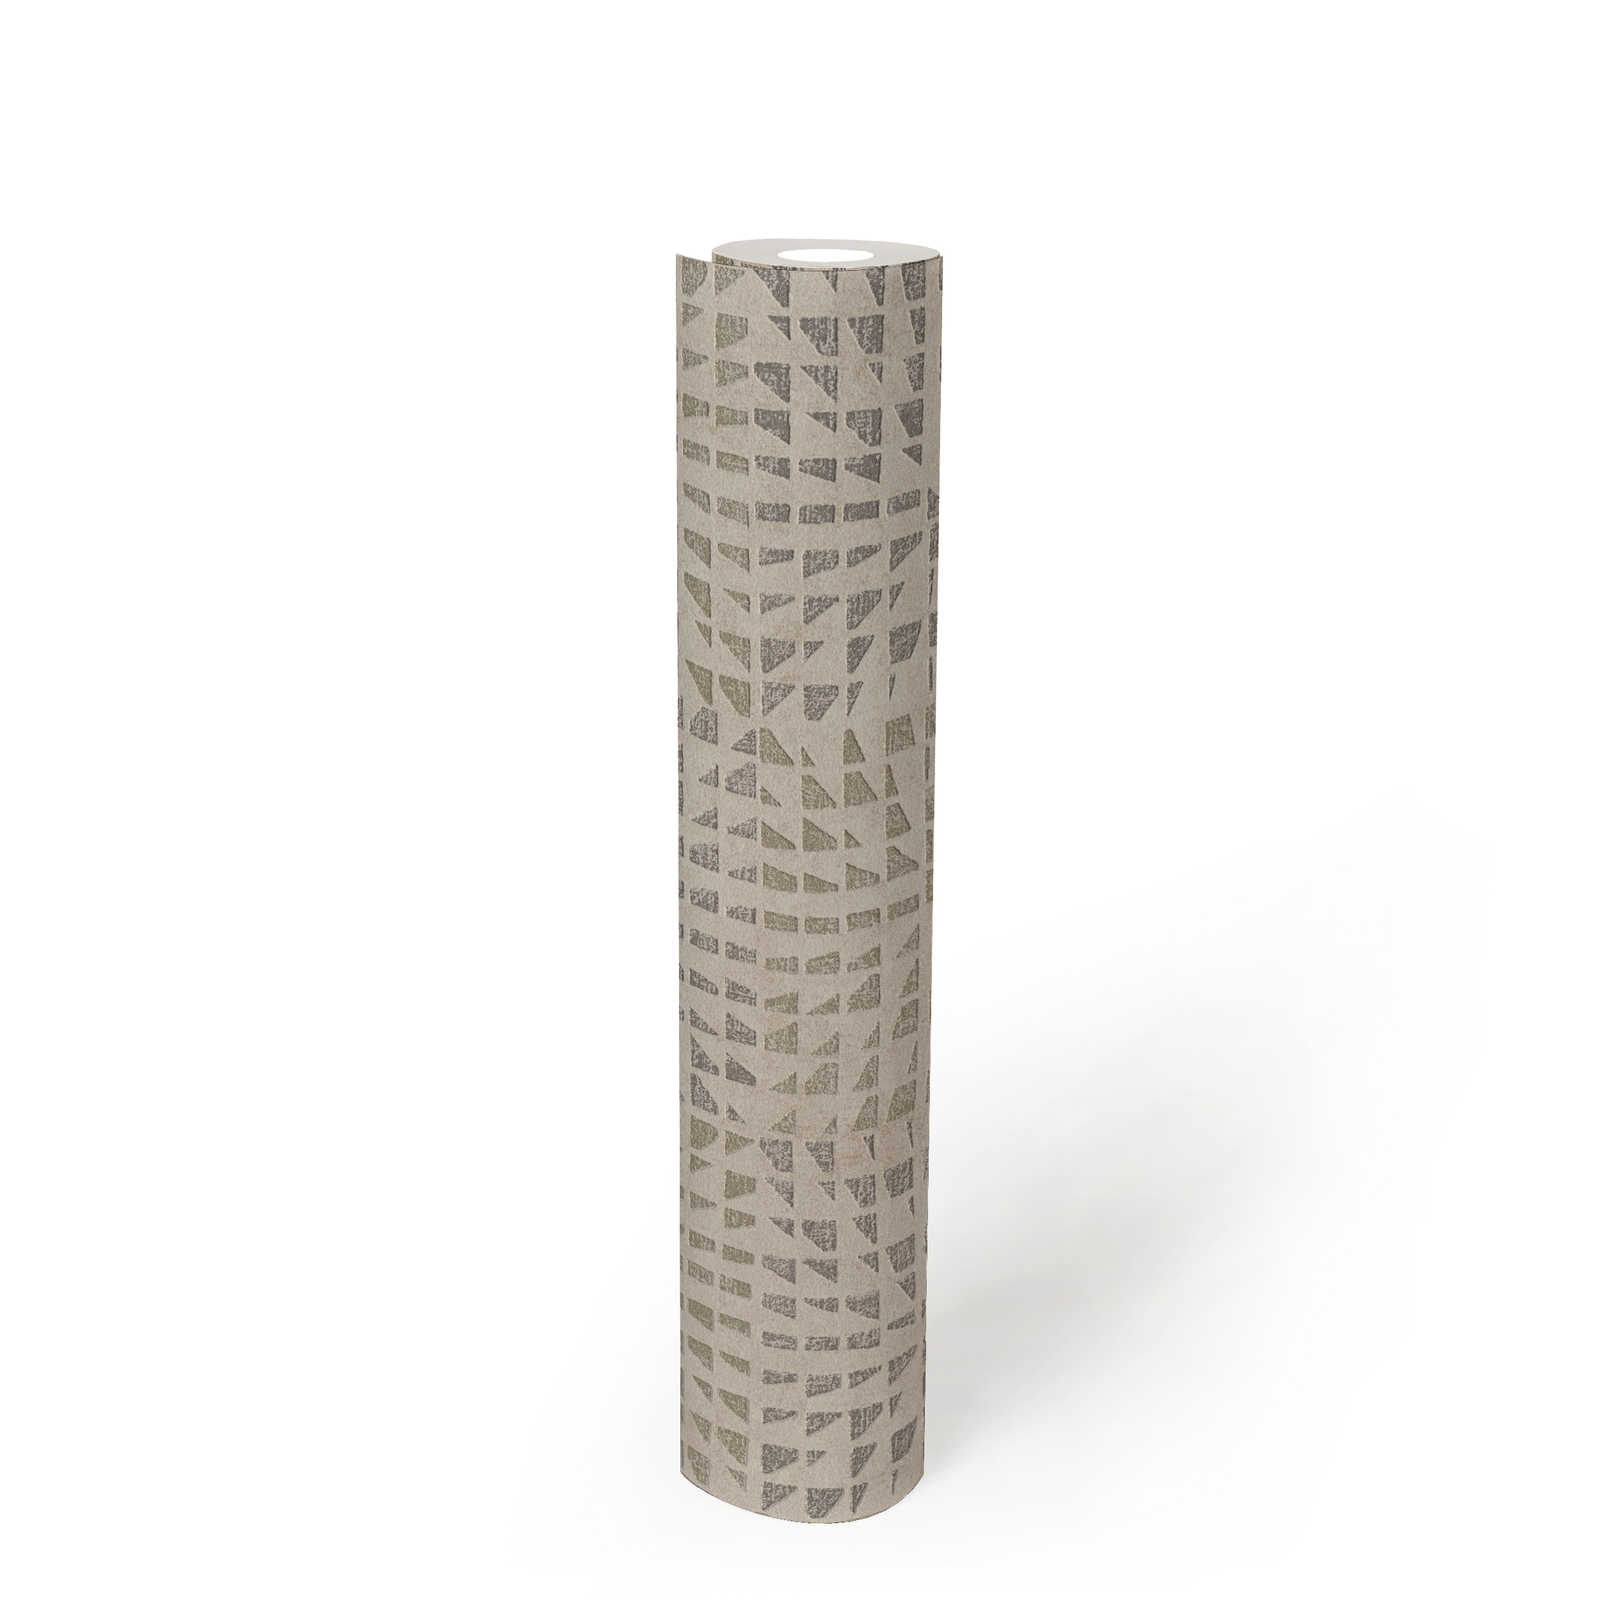             Ethno Tapete mit Strukturmuster & Mosaik-Effekt – Grau, Beige
        